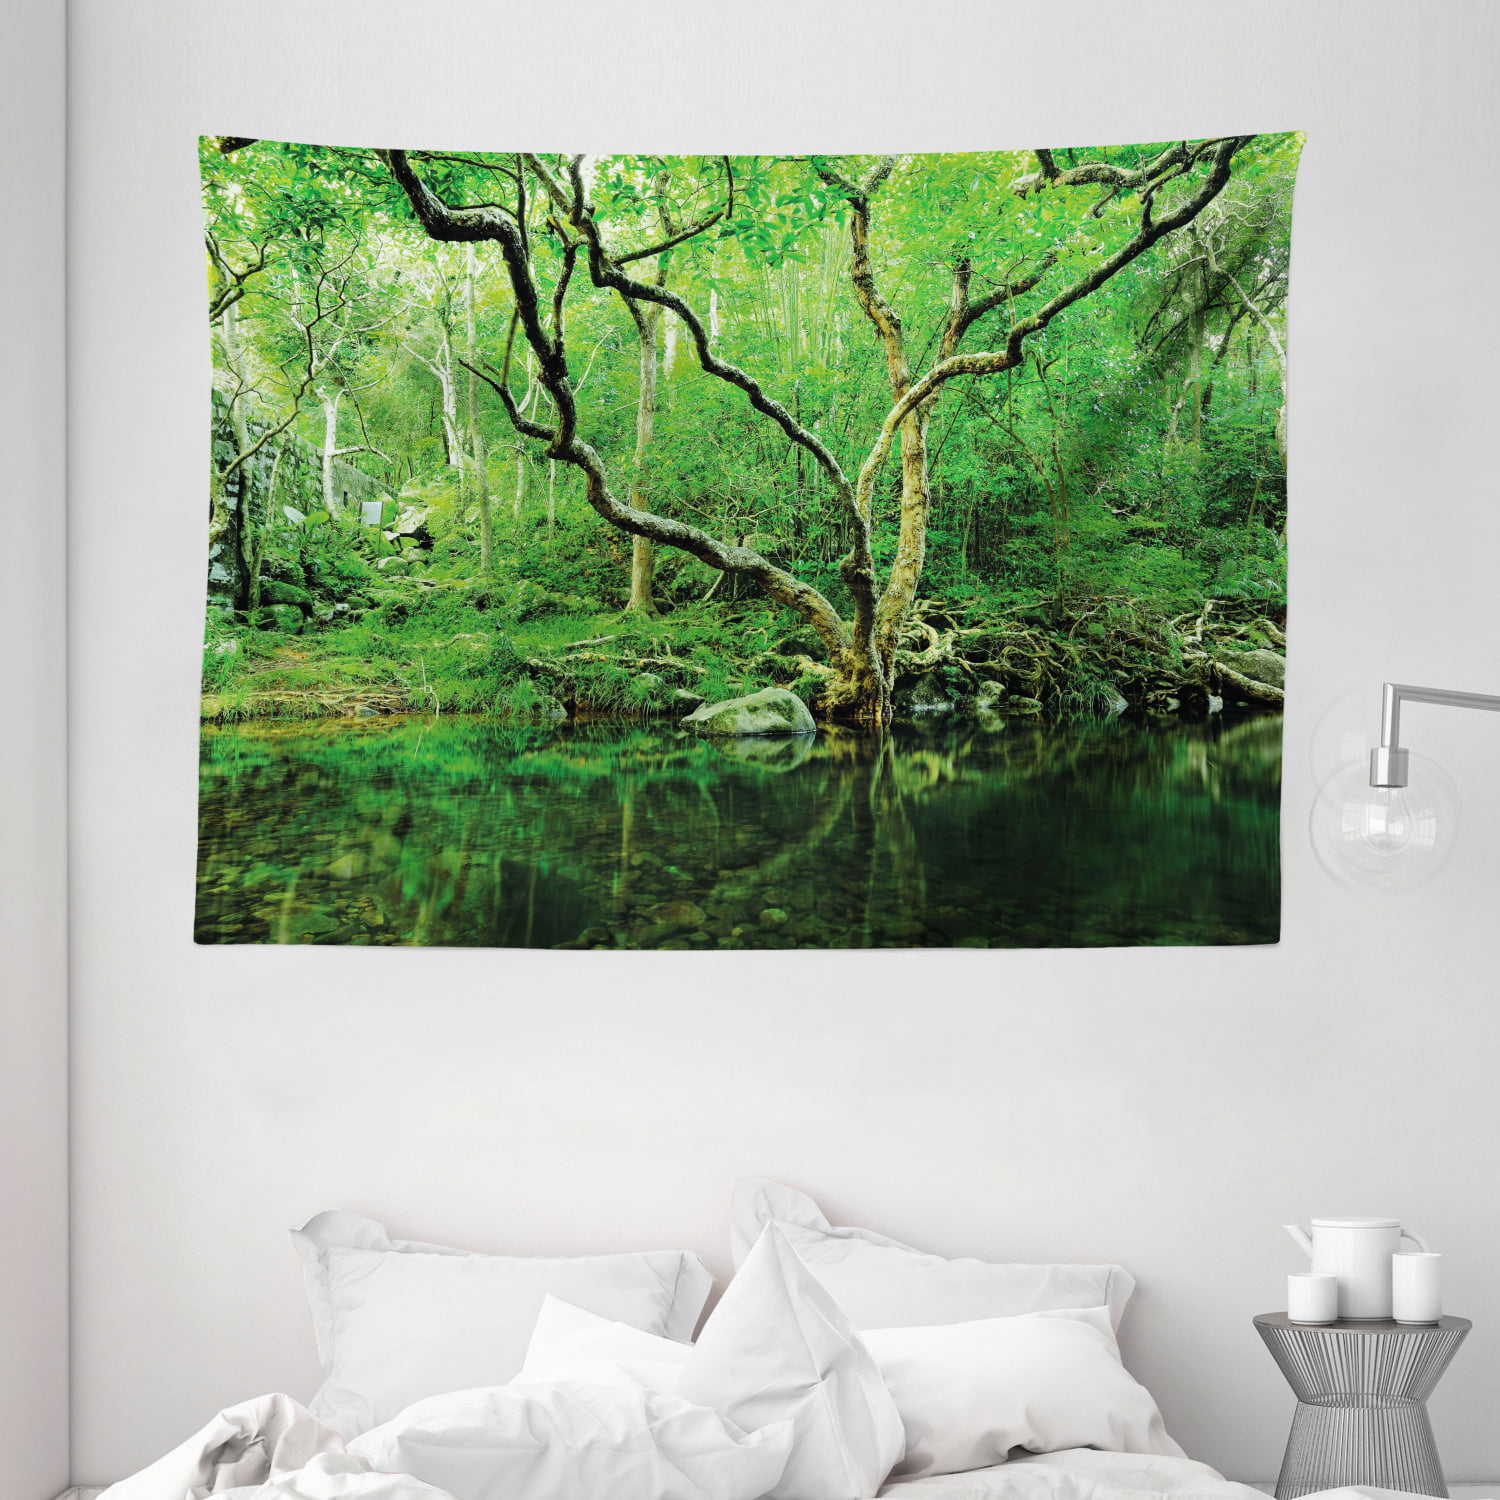 Green Marijuana Leaves Theme Tapestry Wall Hanging for Living Room Bedroom Dorm 